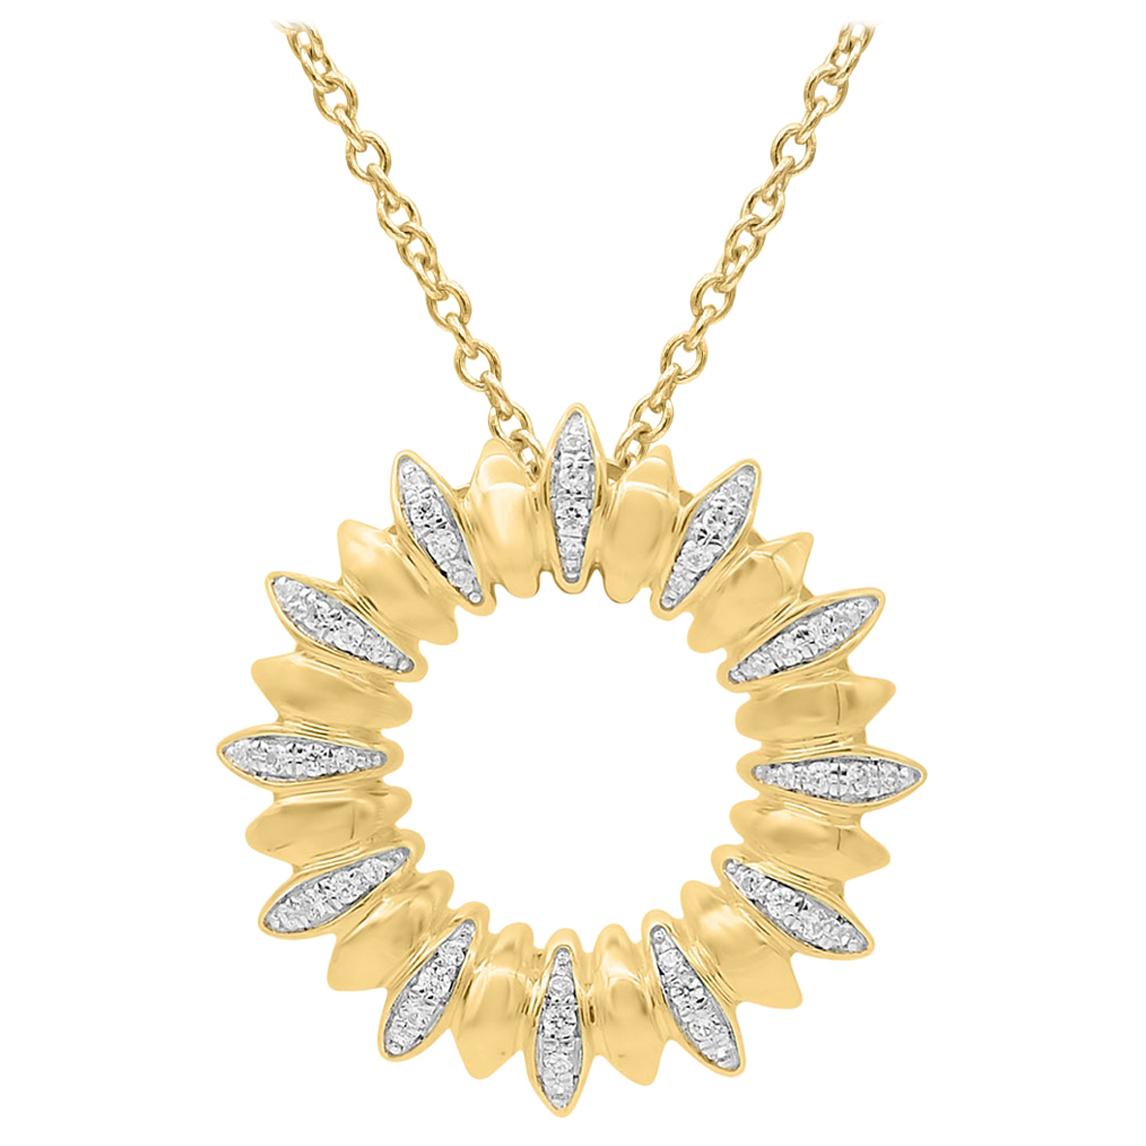 TJD 0.20 Carat Round Diamond 14K Yellow Gold Designer Sunflower Diamond Pendant